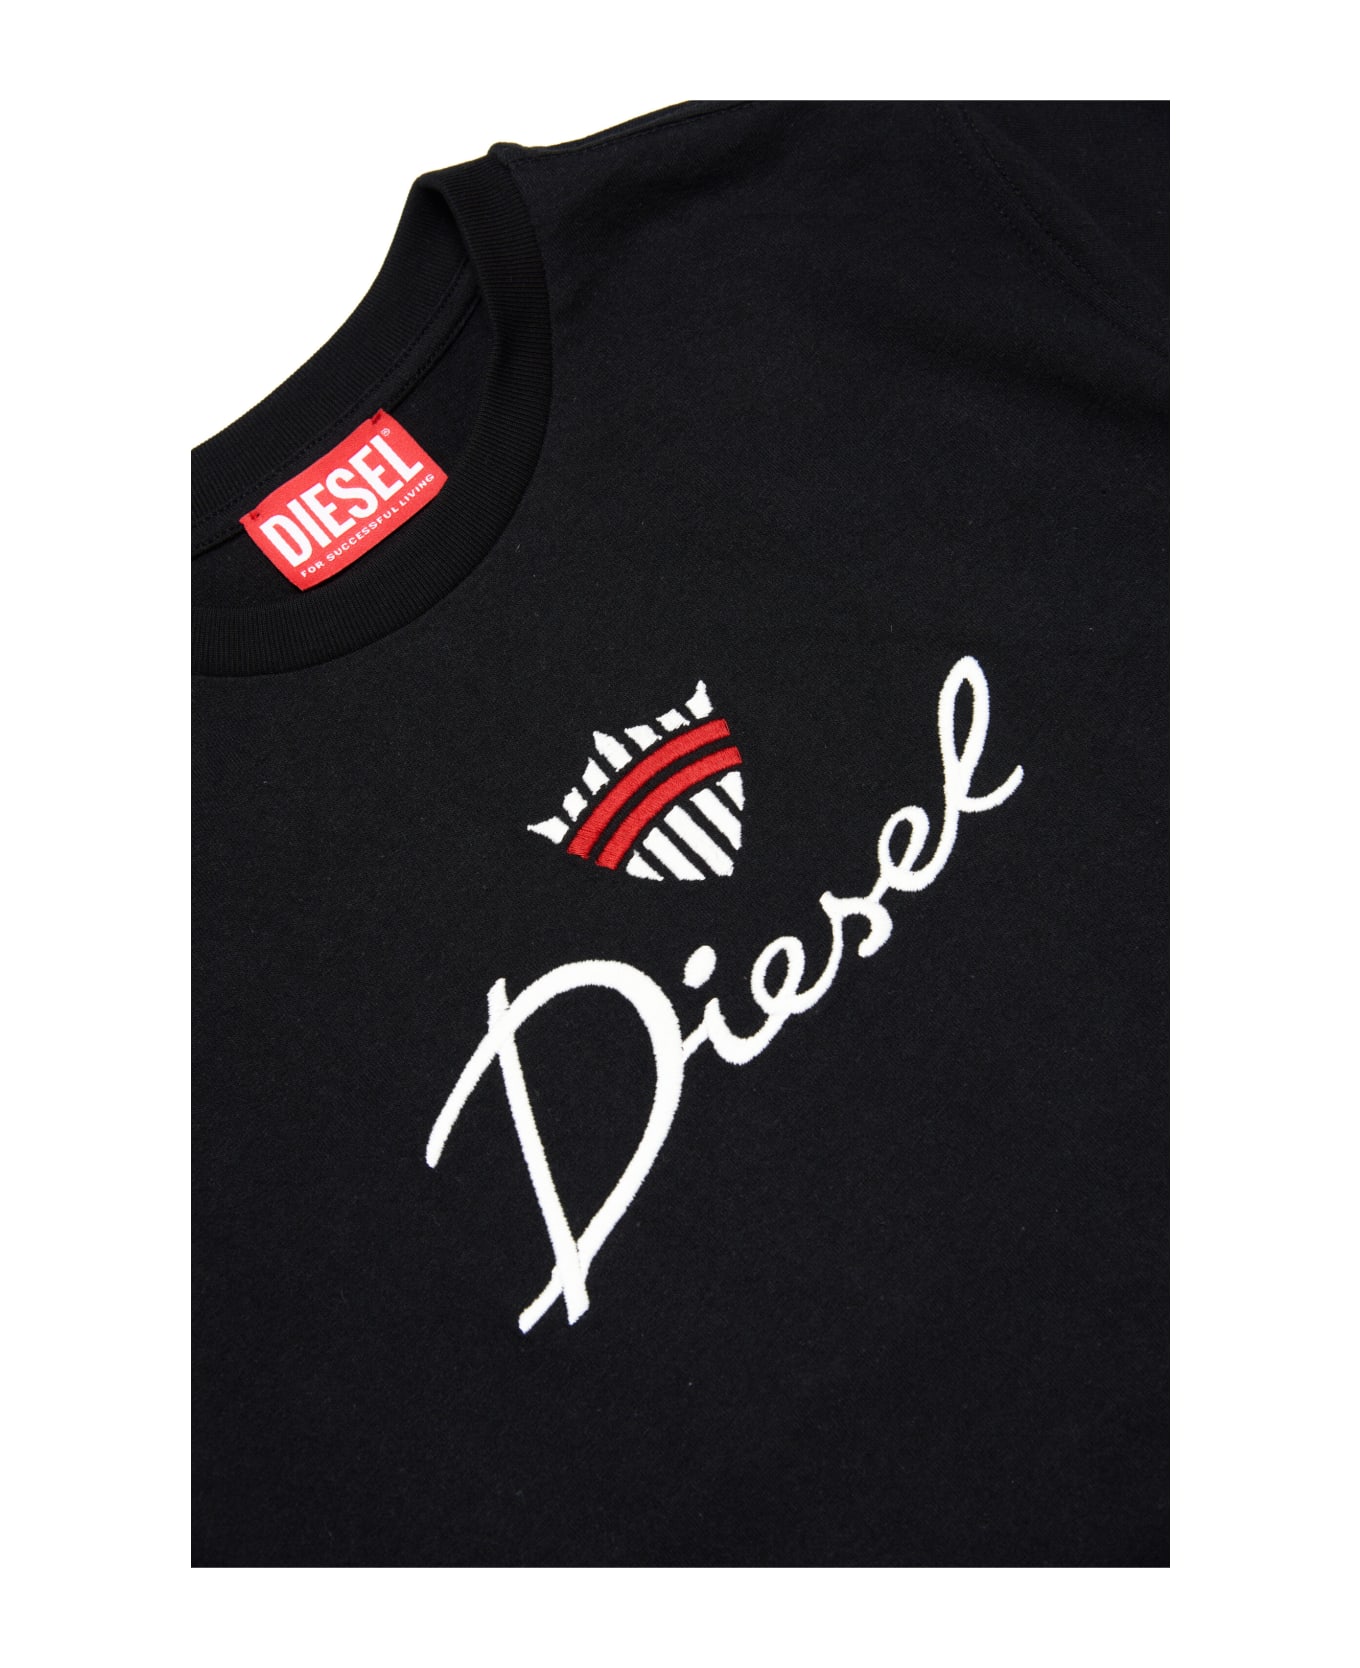 Diesel Twashg6 Over T-shirt Diesel T-shirt With Corona Logo - Black